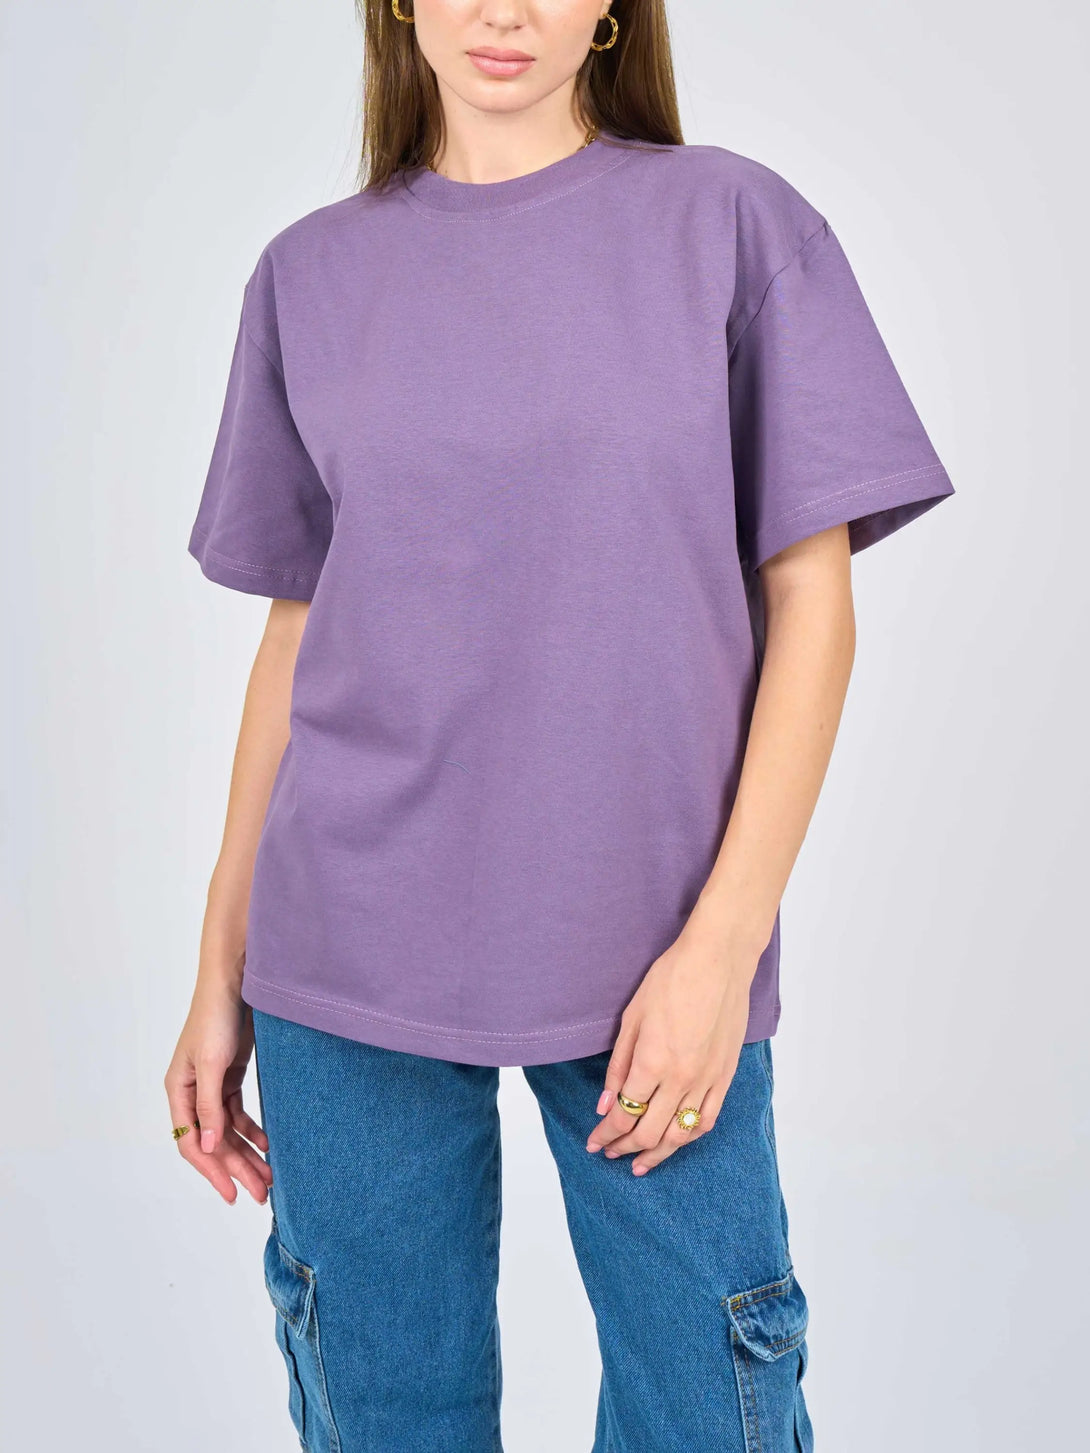 Oversized Purple Cotton T-Shirt.